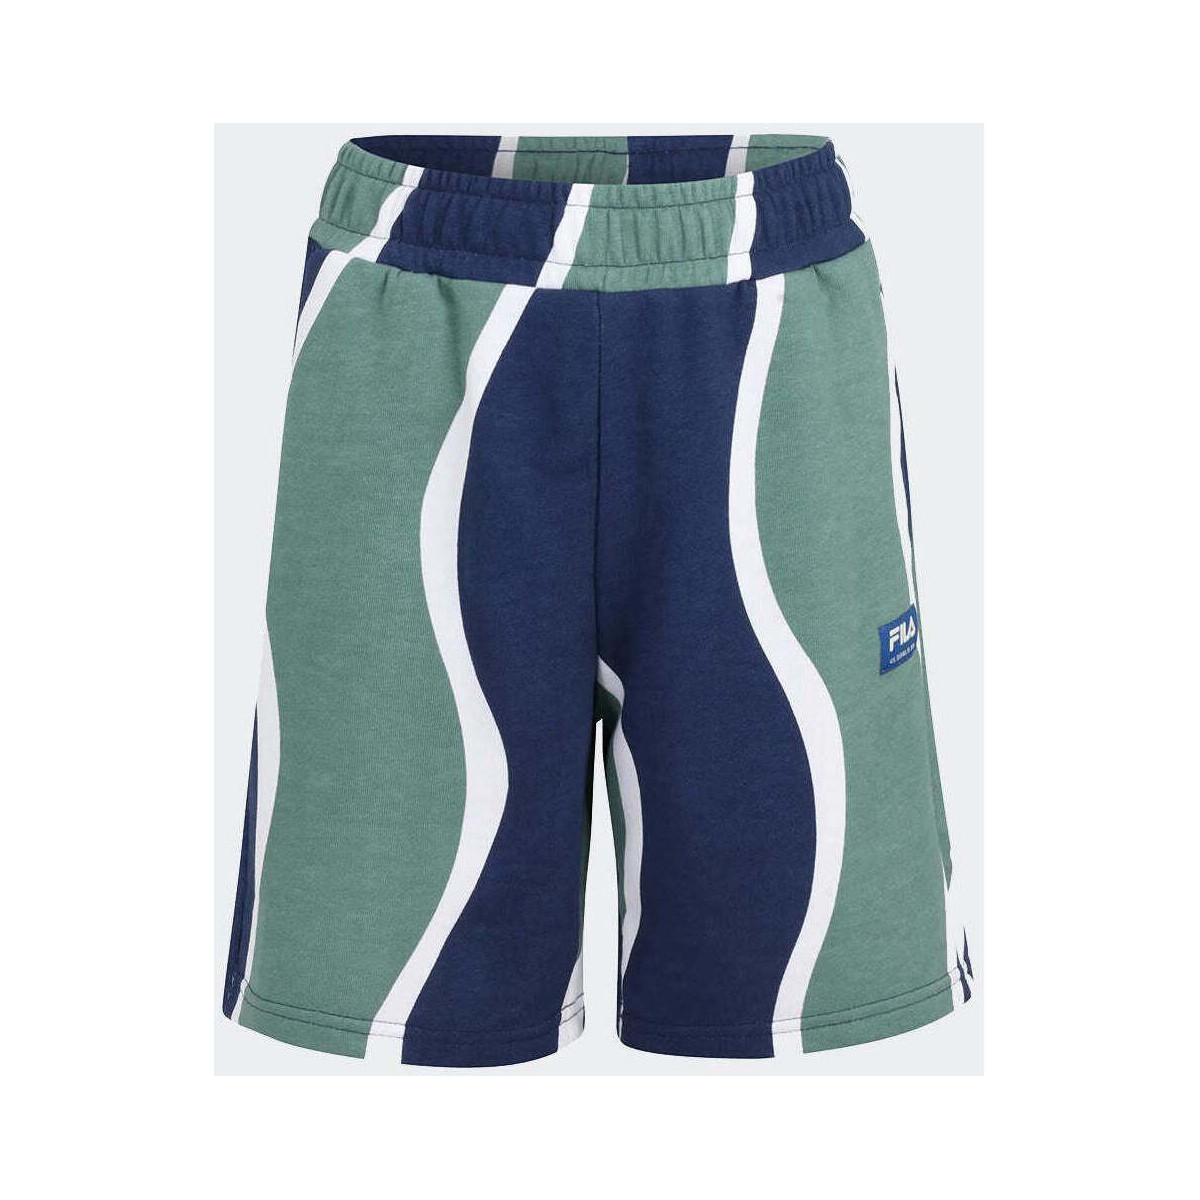 Vêtements Garçon Shorts / Bermudas Fila  Bleu